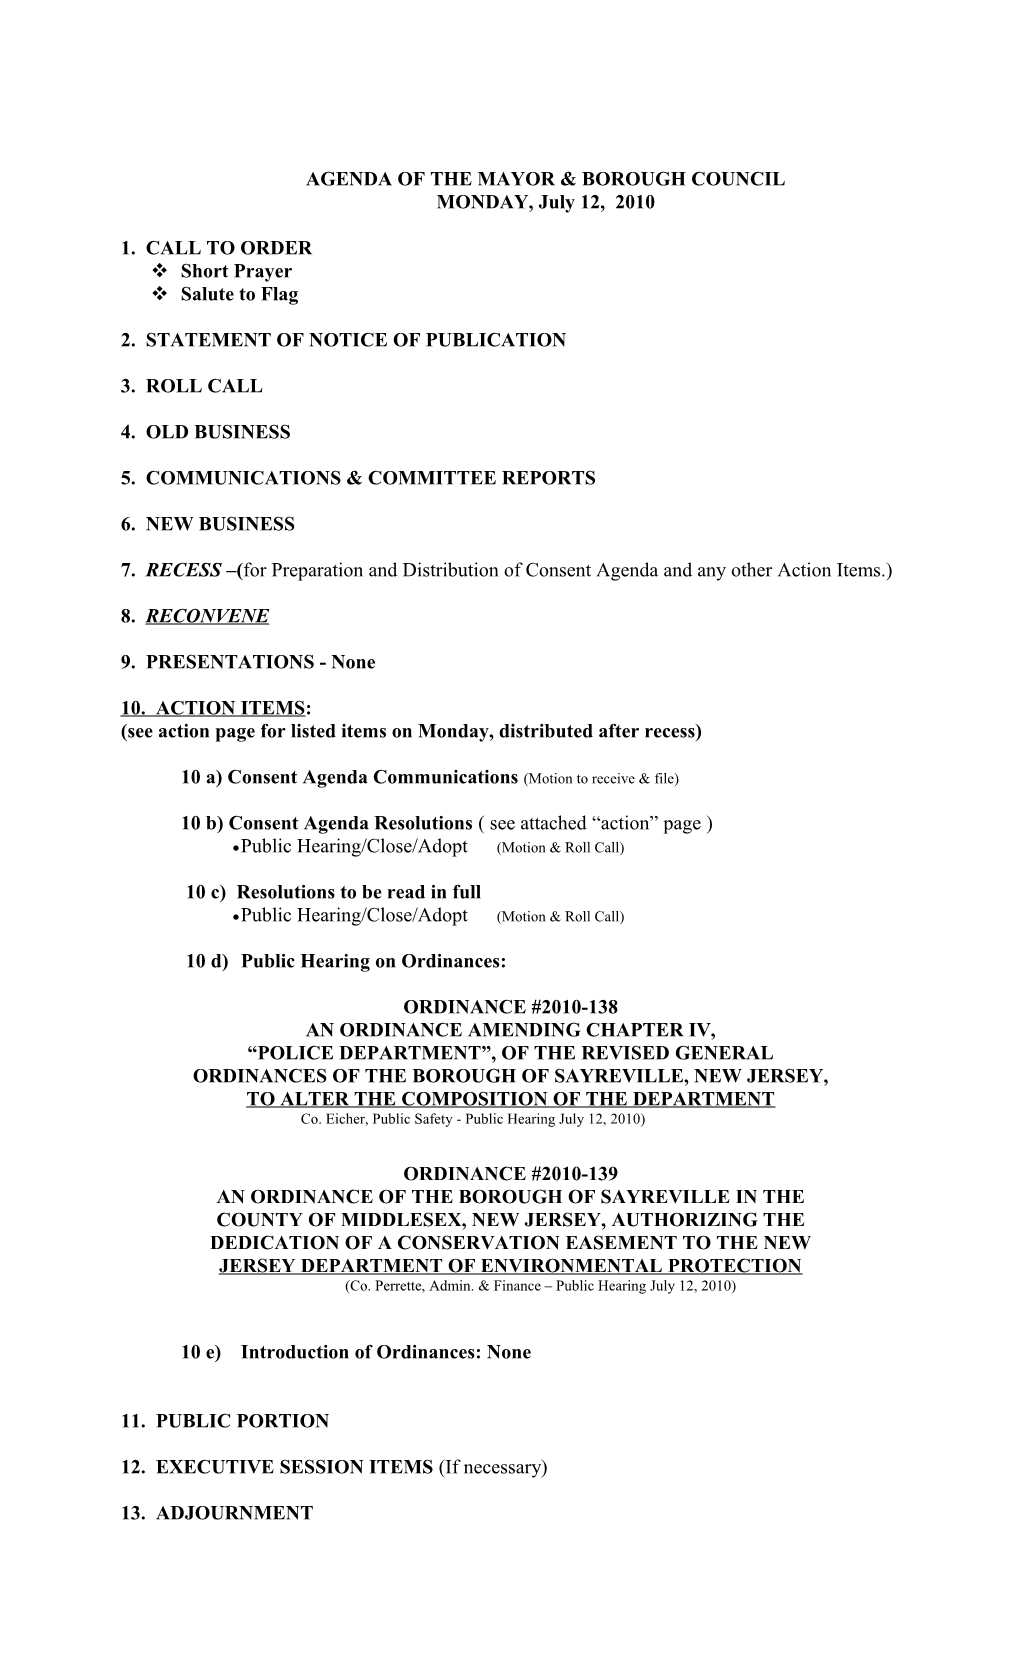 Agenda of the Mayor & Borough Council s2